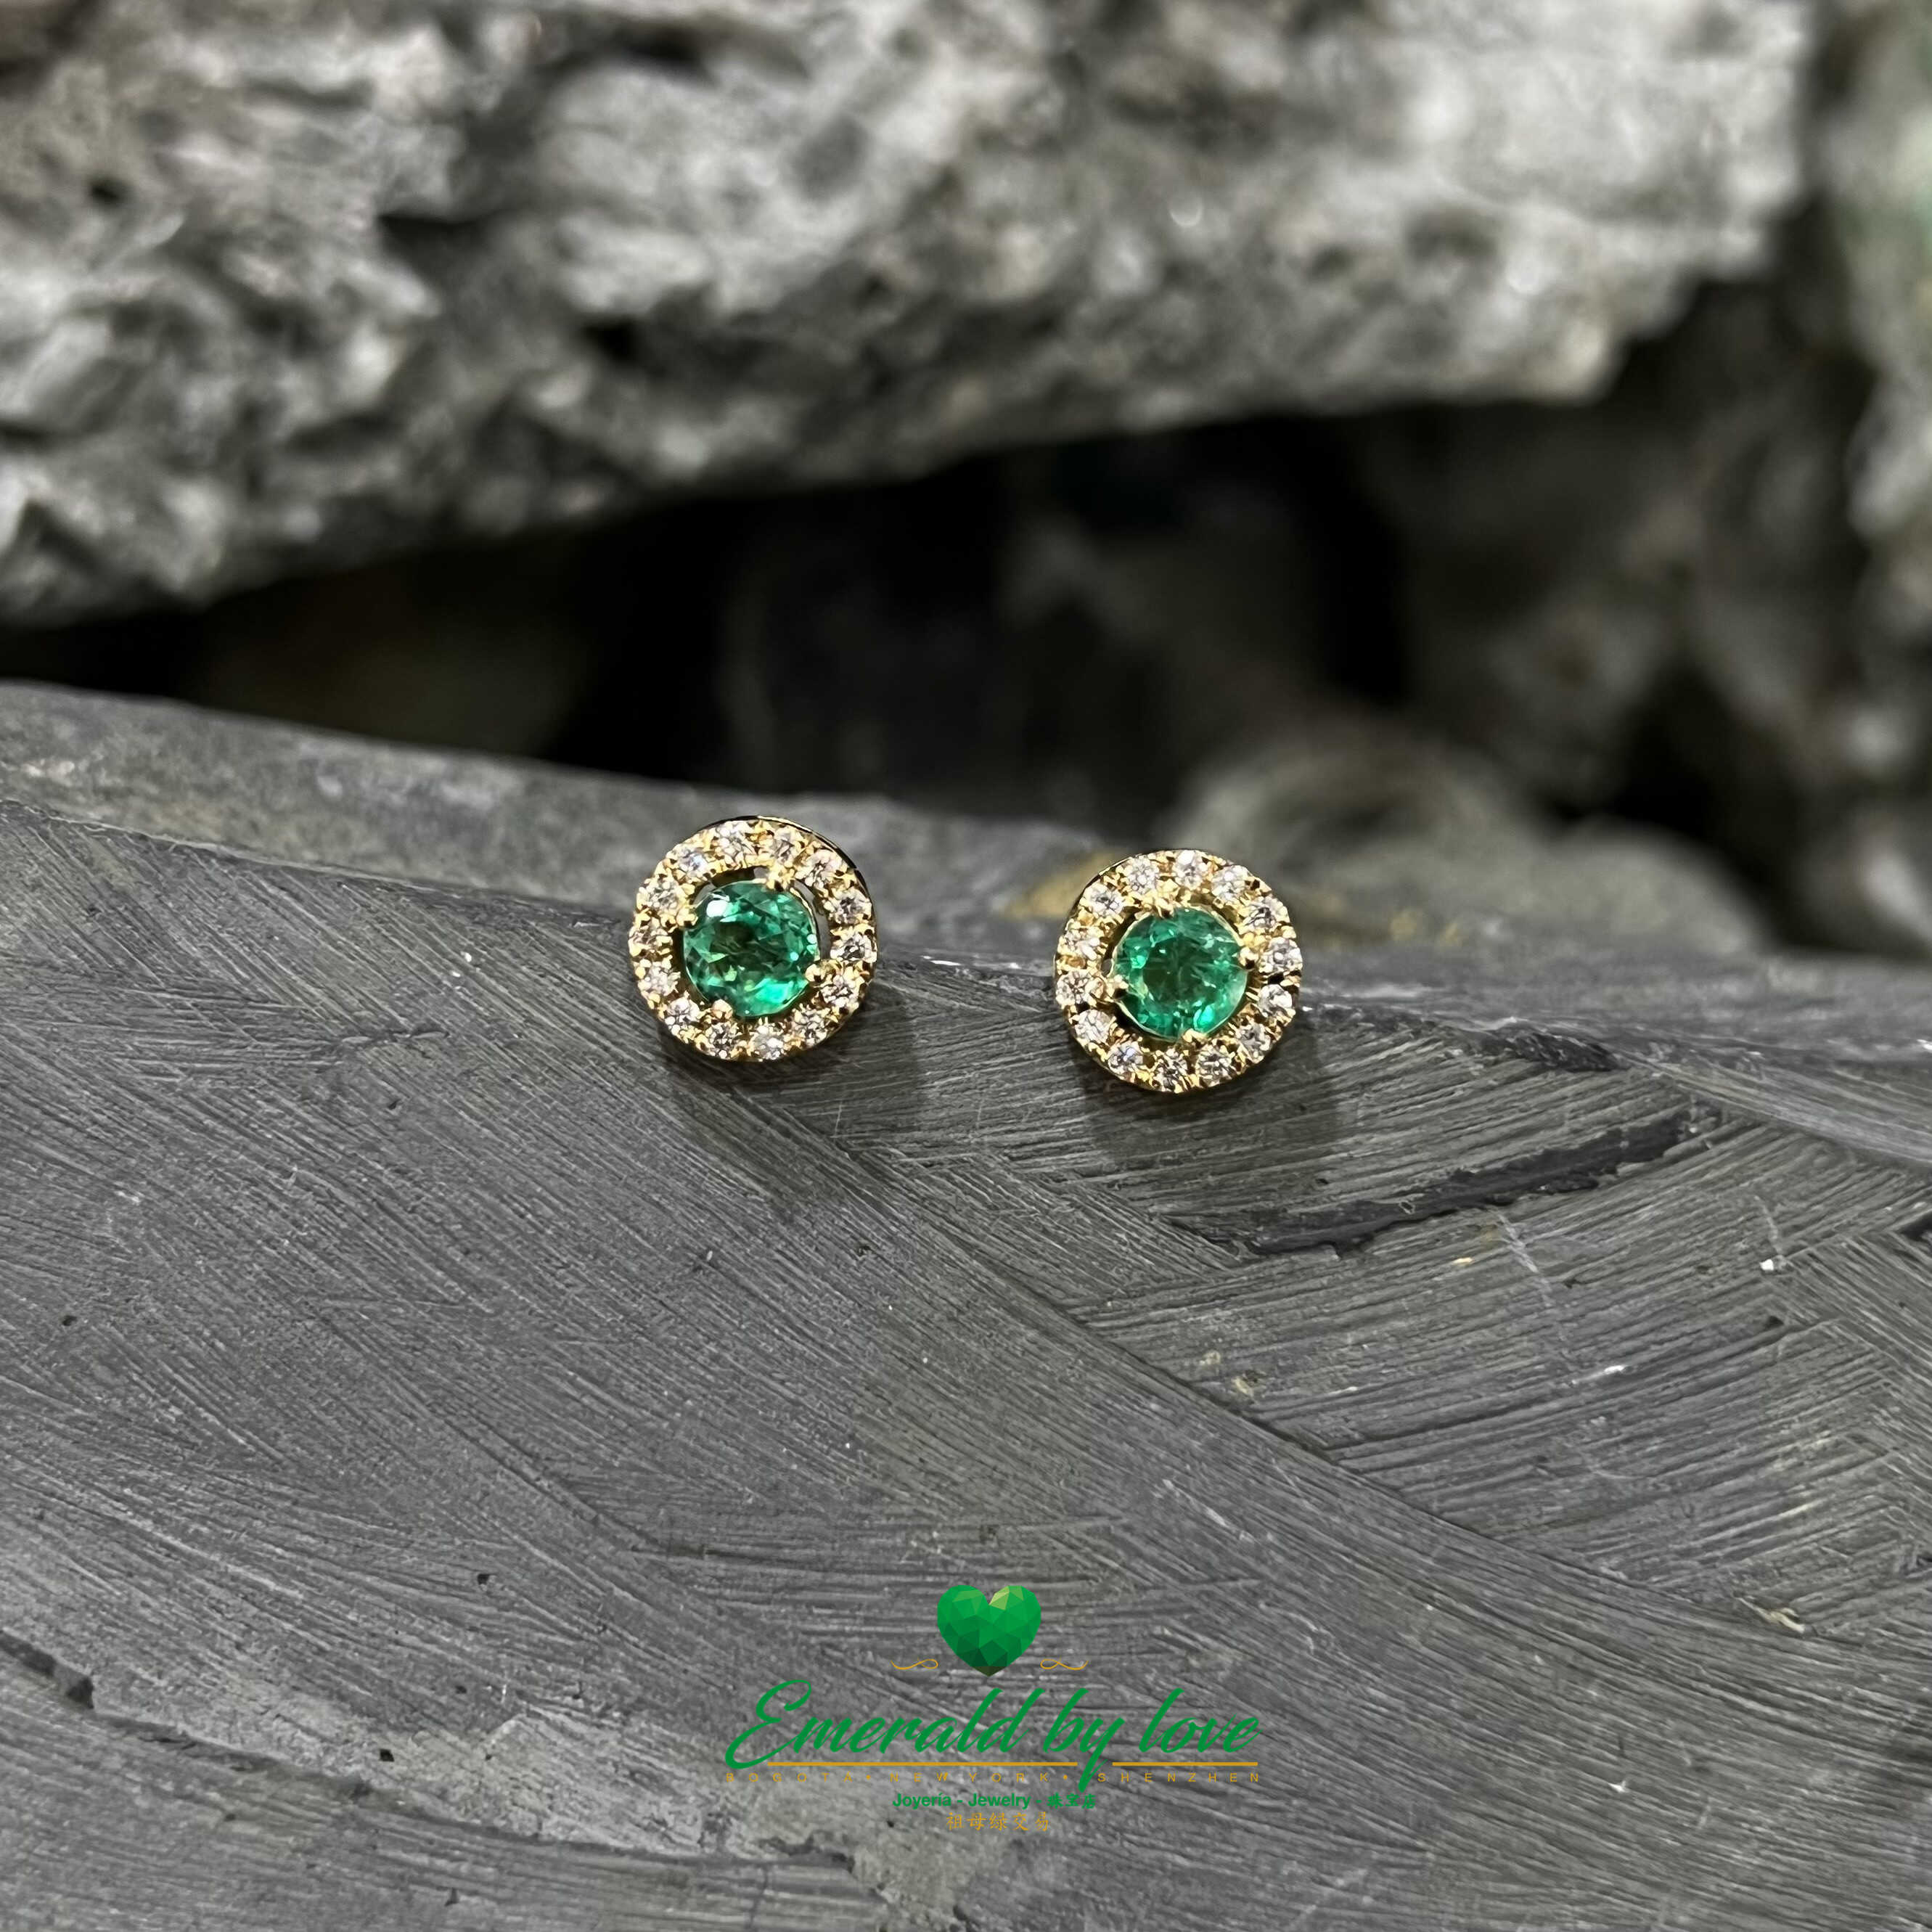 Regal Marquise-Cut Yellow Gold Earrings: 0.6 TCW Emeralds, 0.28 CT Diamonds